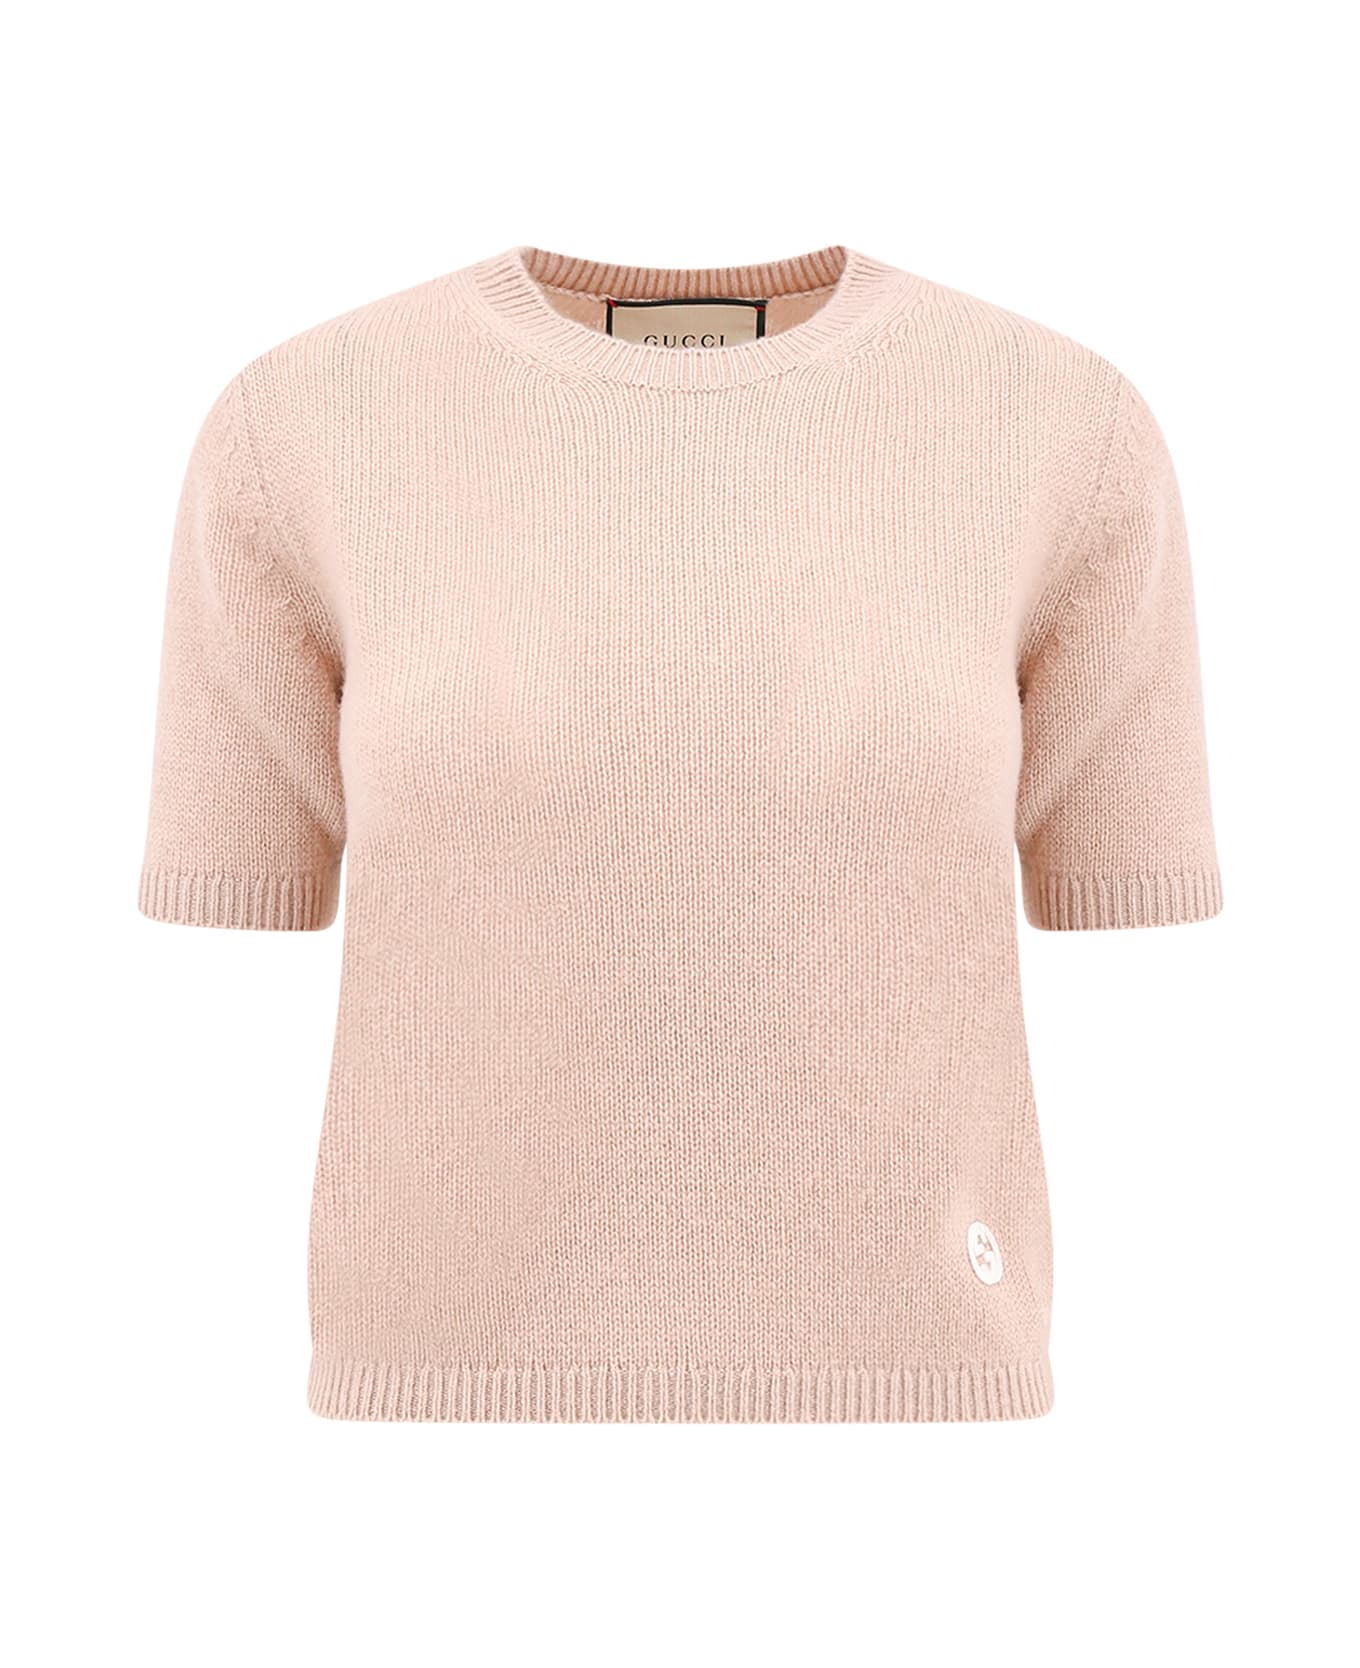 Gucci Sweater - Pink ニットウェア